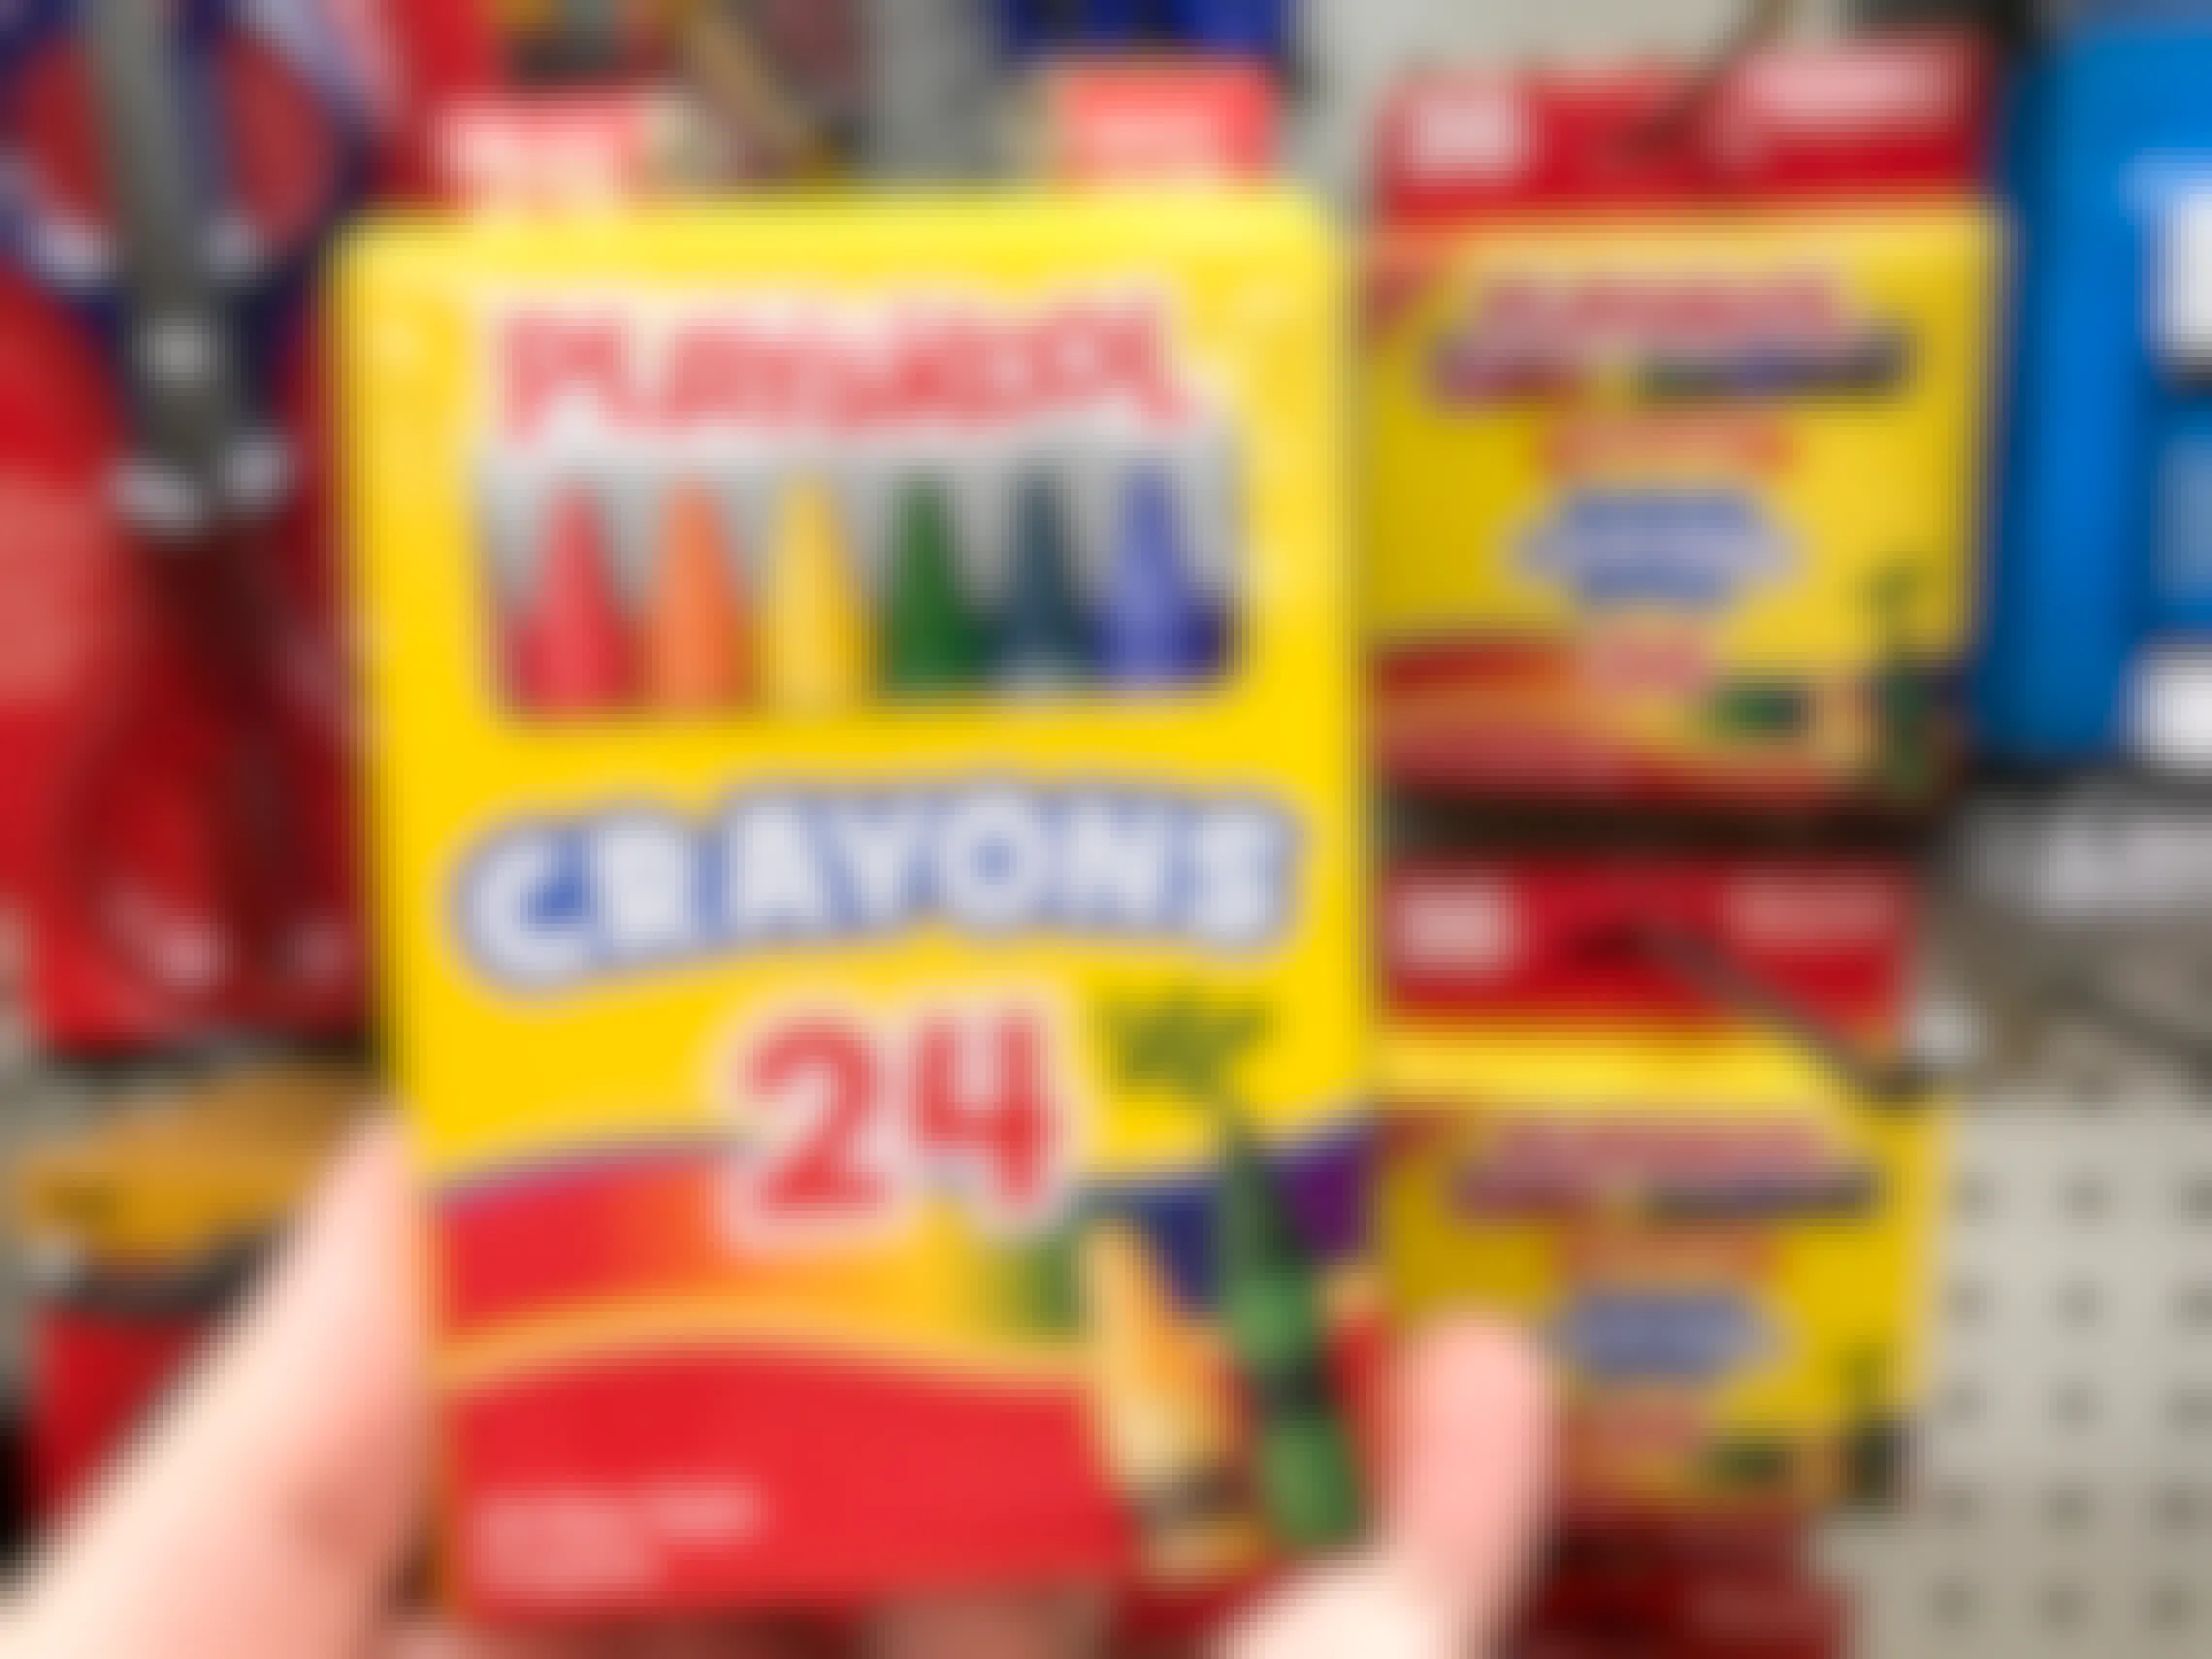 Playskool Crayons at dollar tree